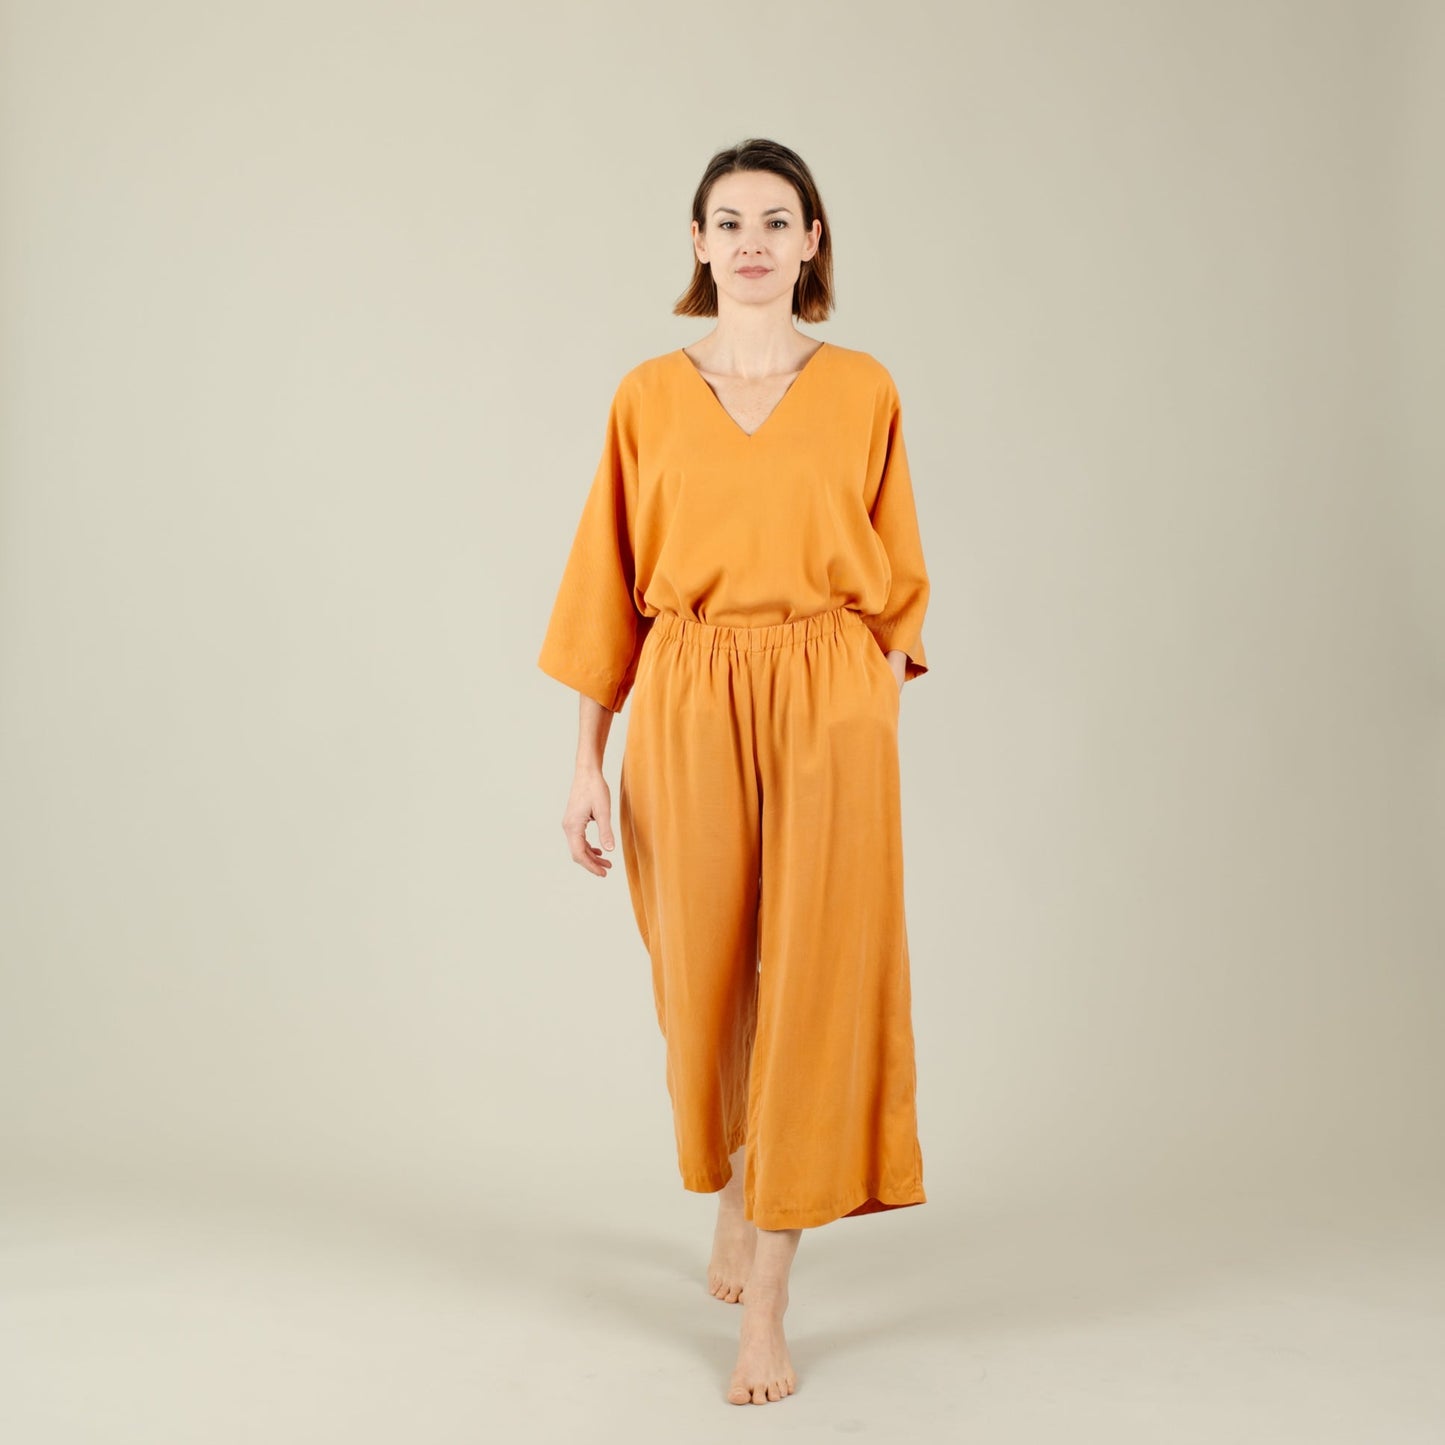 Damen Shirt Top Oberteil aus Tencel in Mango Gelb im Kimonoschnitt; Urheber: Mini & Eve